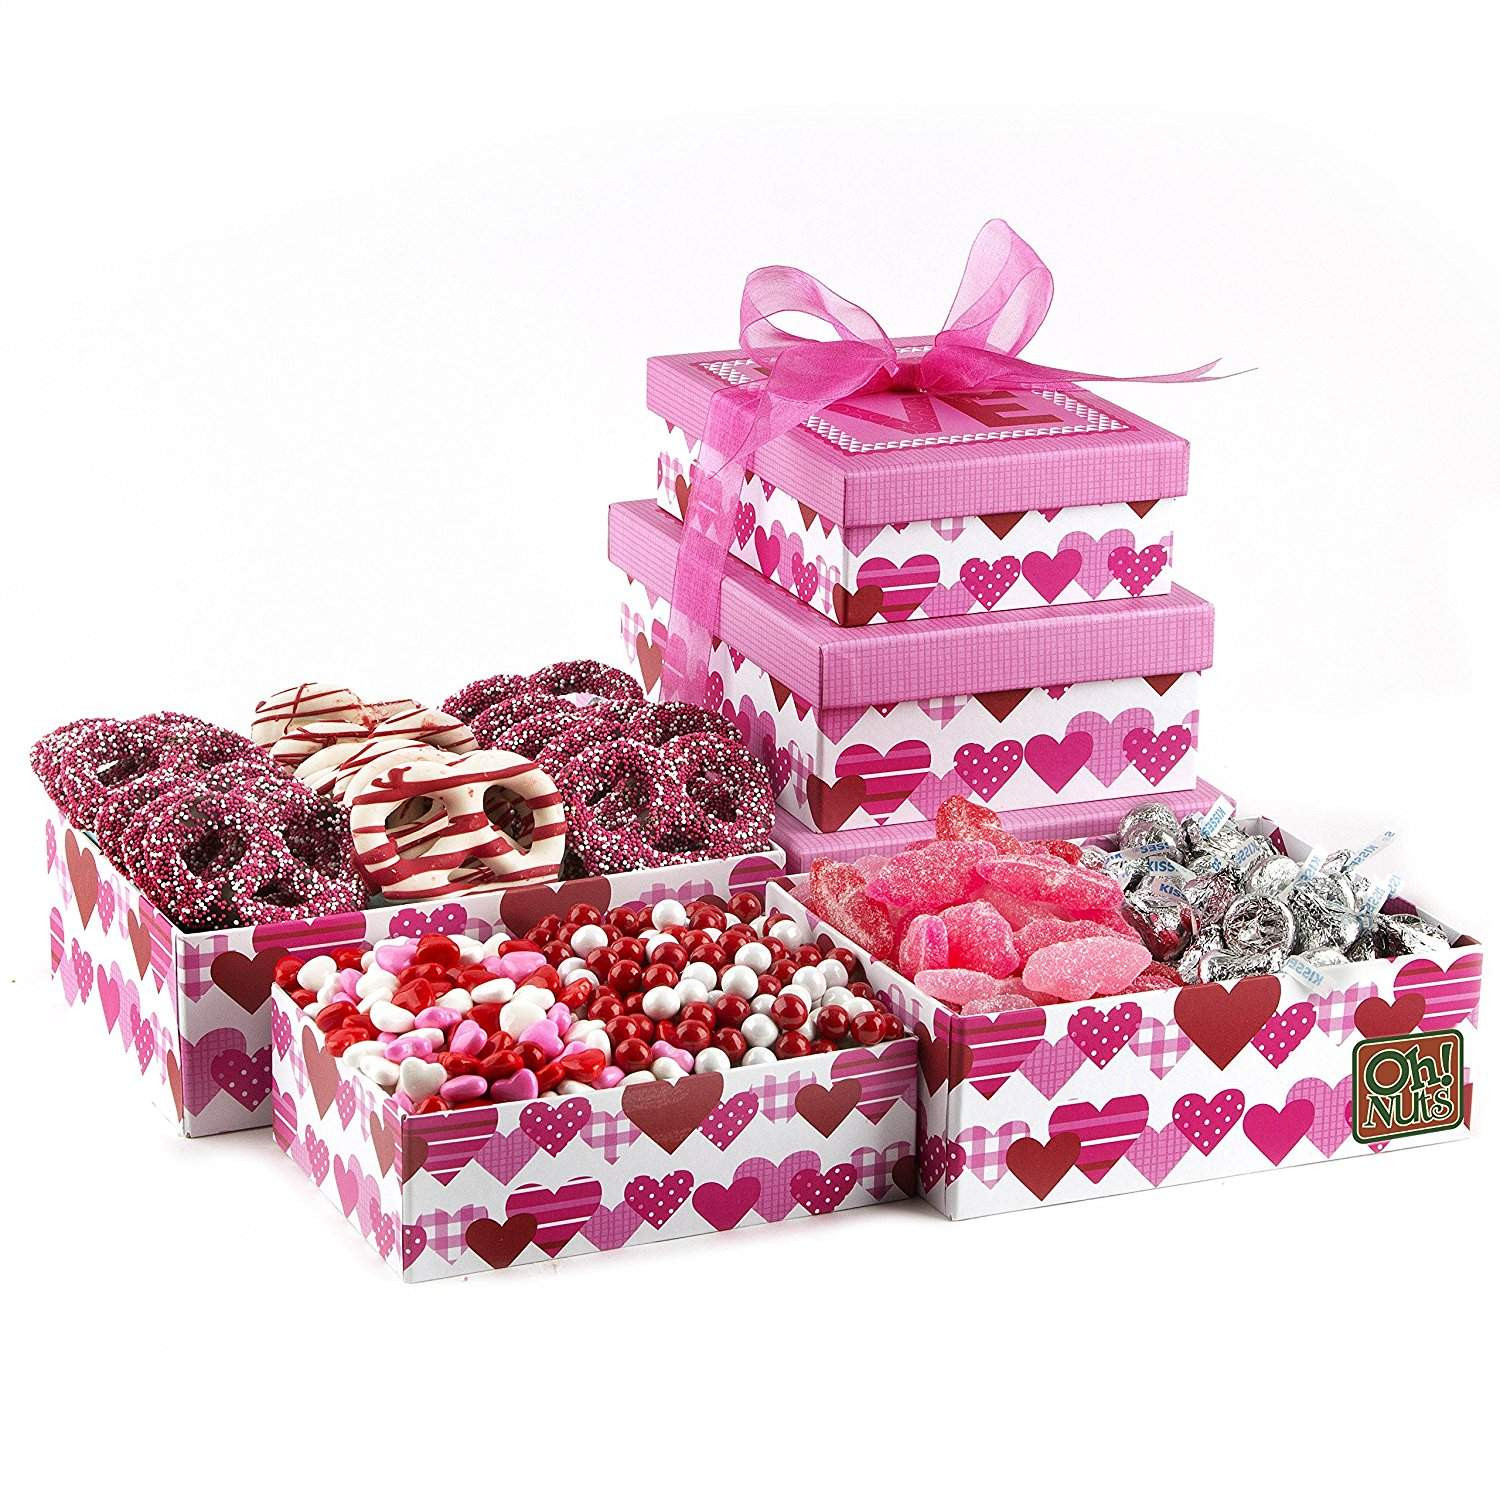 Valentine Candy Gift Ideas
 Top 10 Best Valentine’s Day Candy Gift Ideas